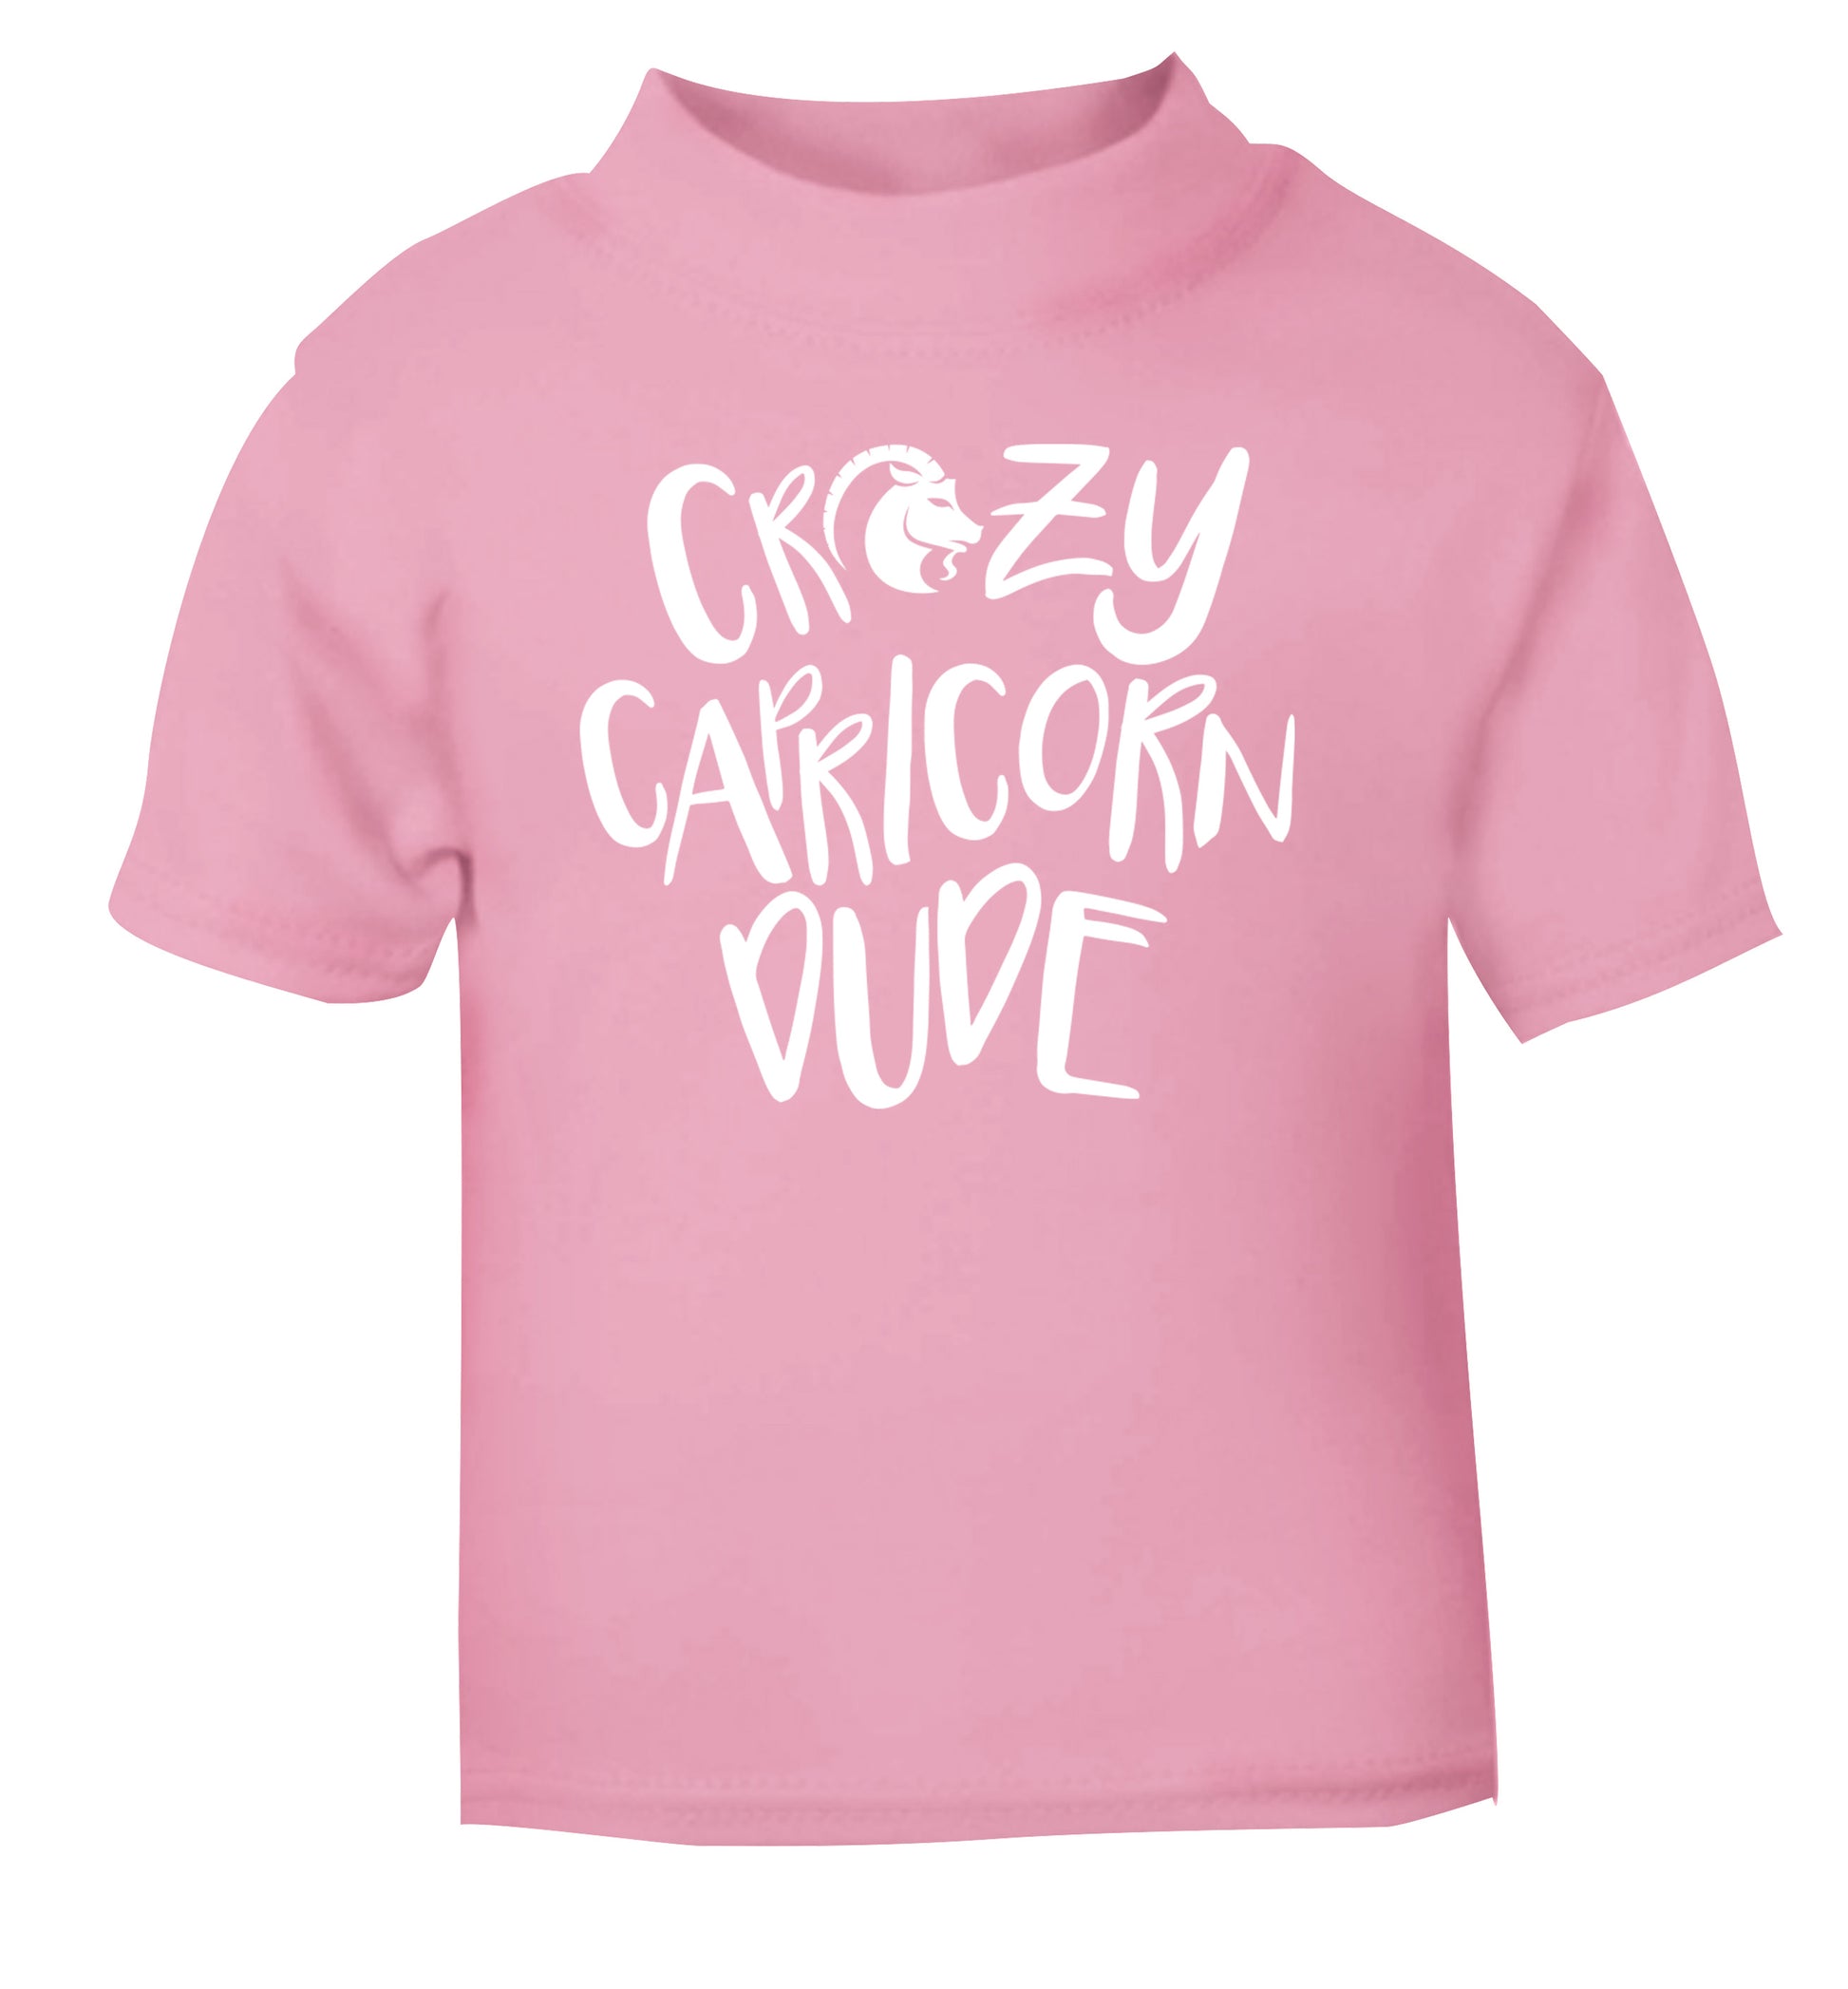 Crazy capricorn dude light pink Baby Toddler Tshirt 2 Years